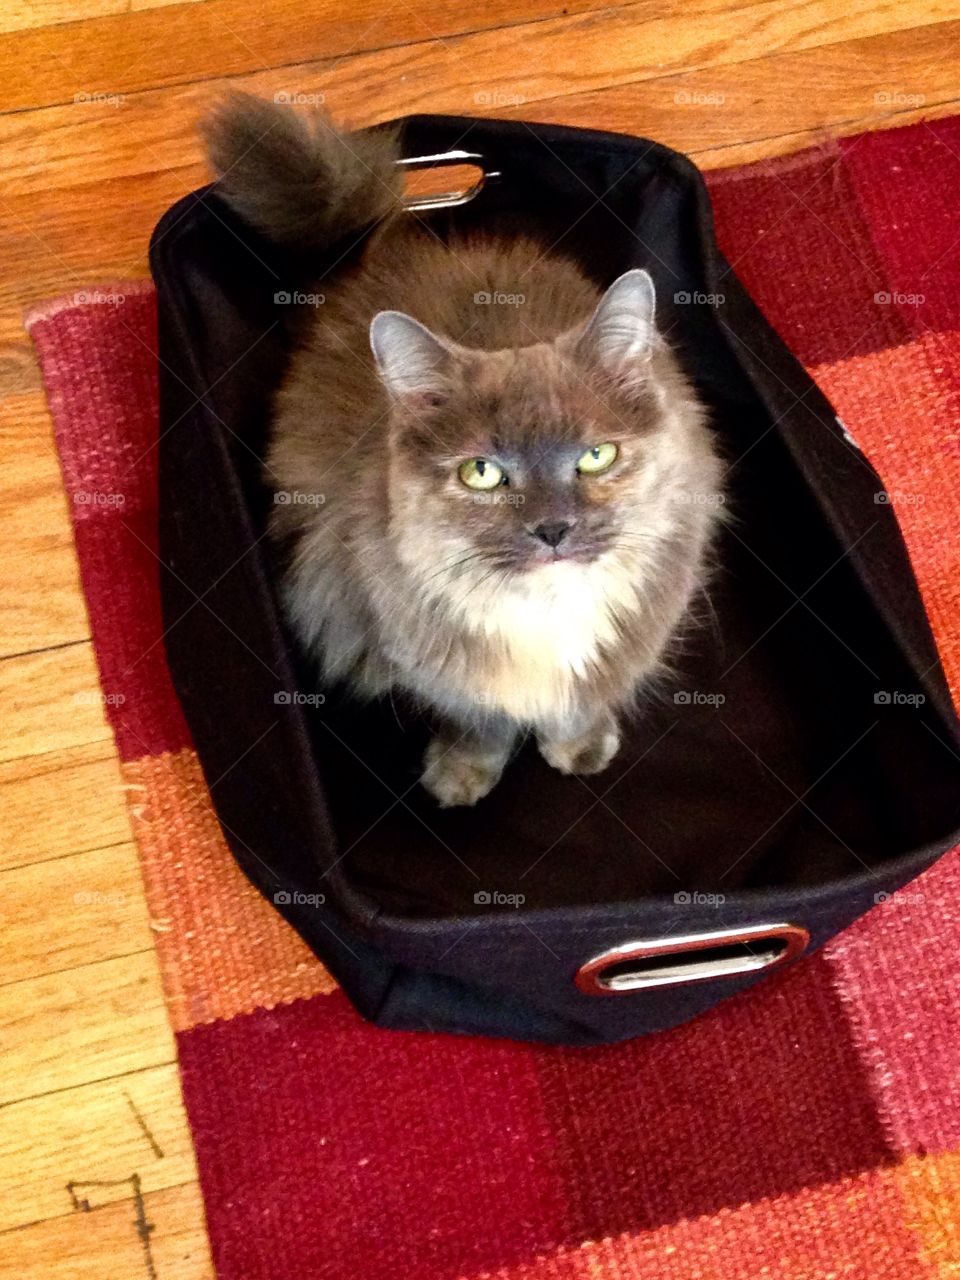 Lola in a basket. Kitty